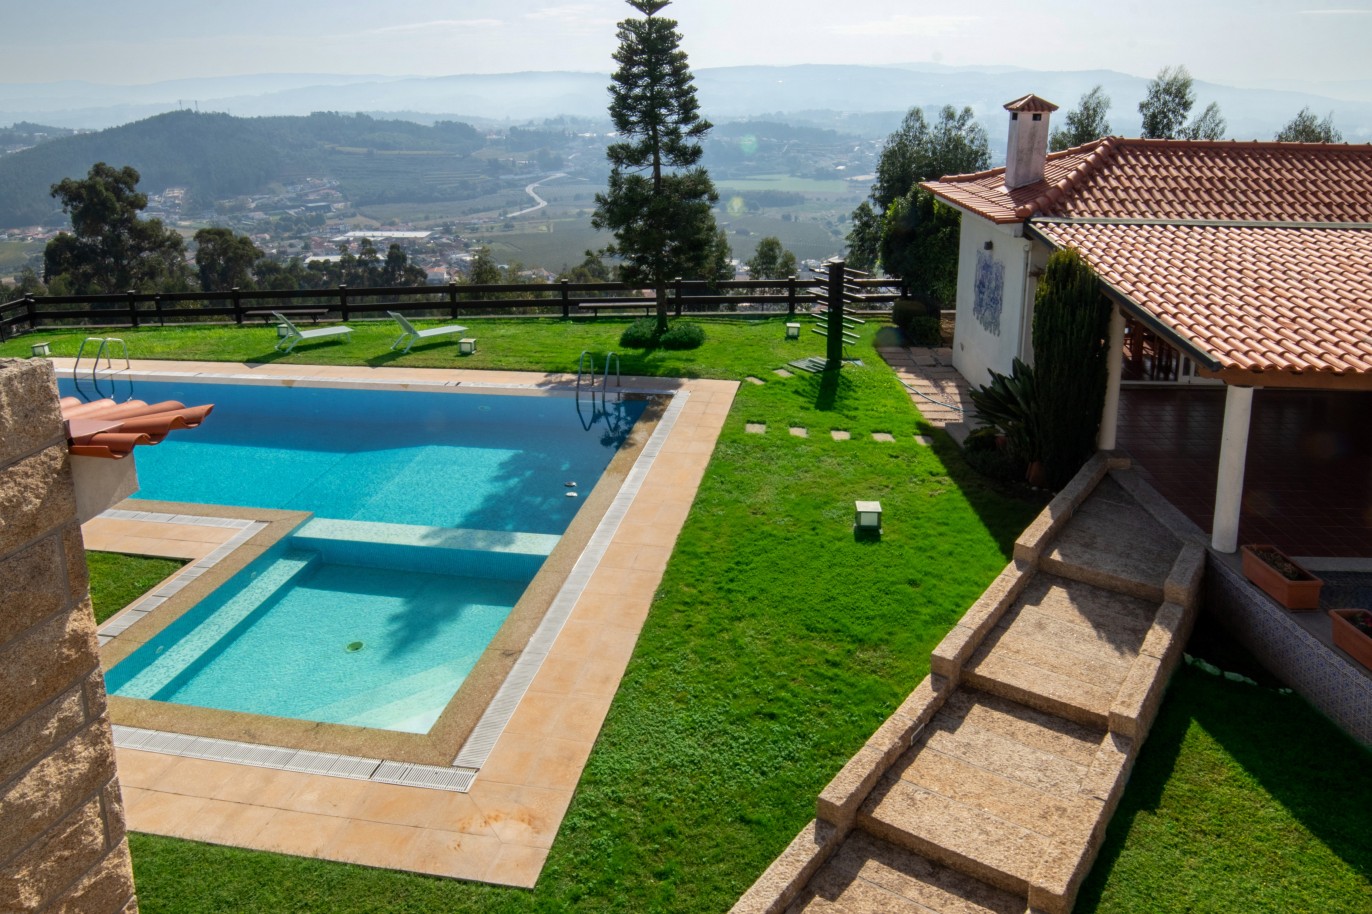 Villa de 6 chambres avec piscine, à vendre, à Lousada, Portugal_249013